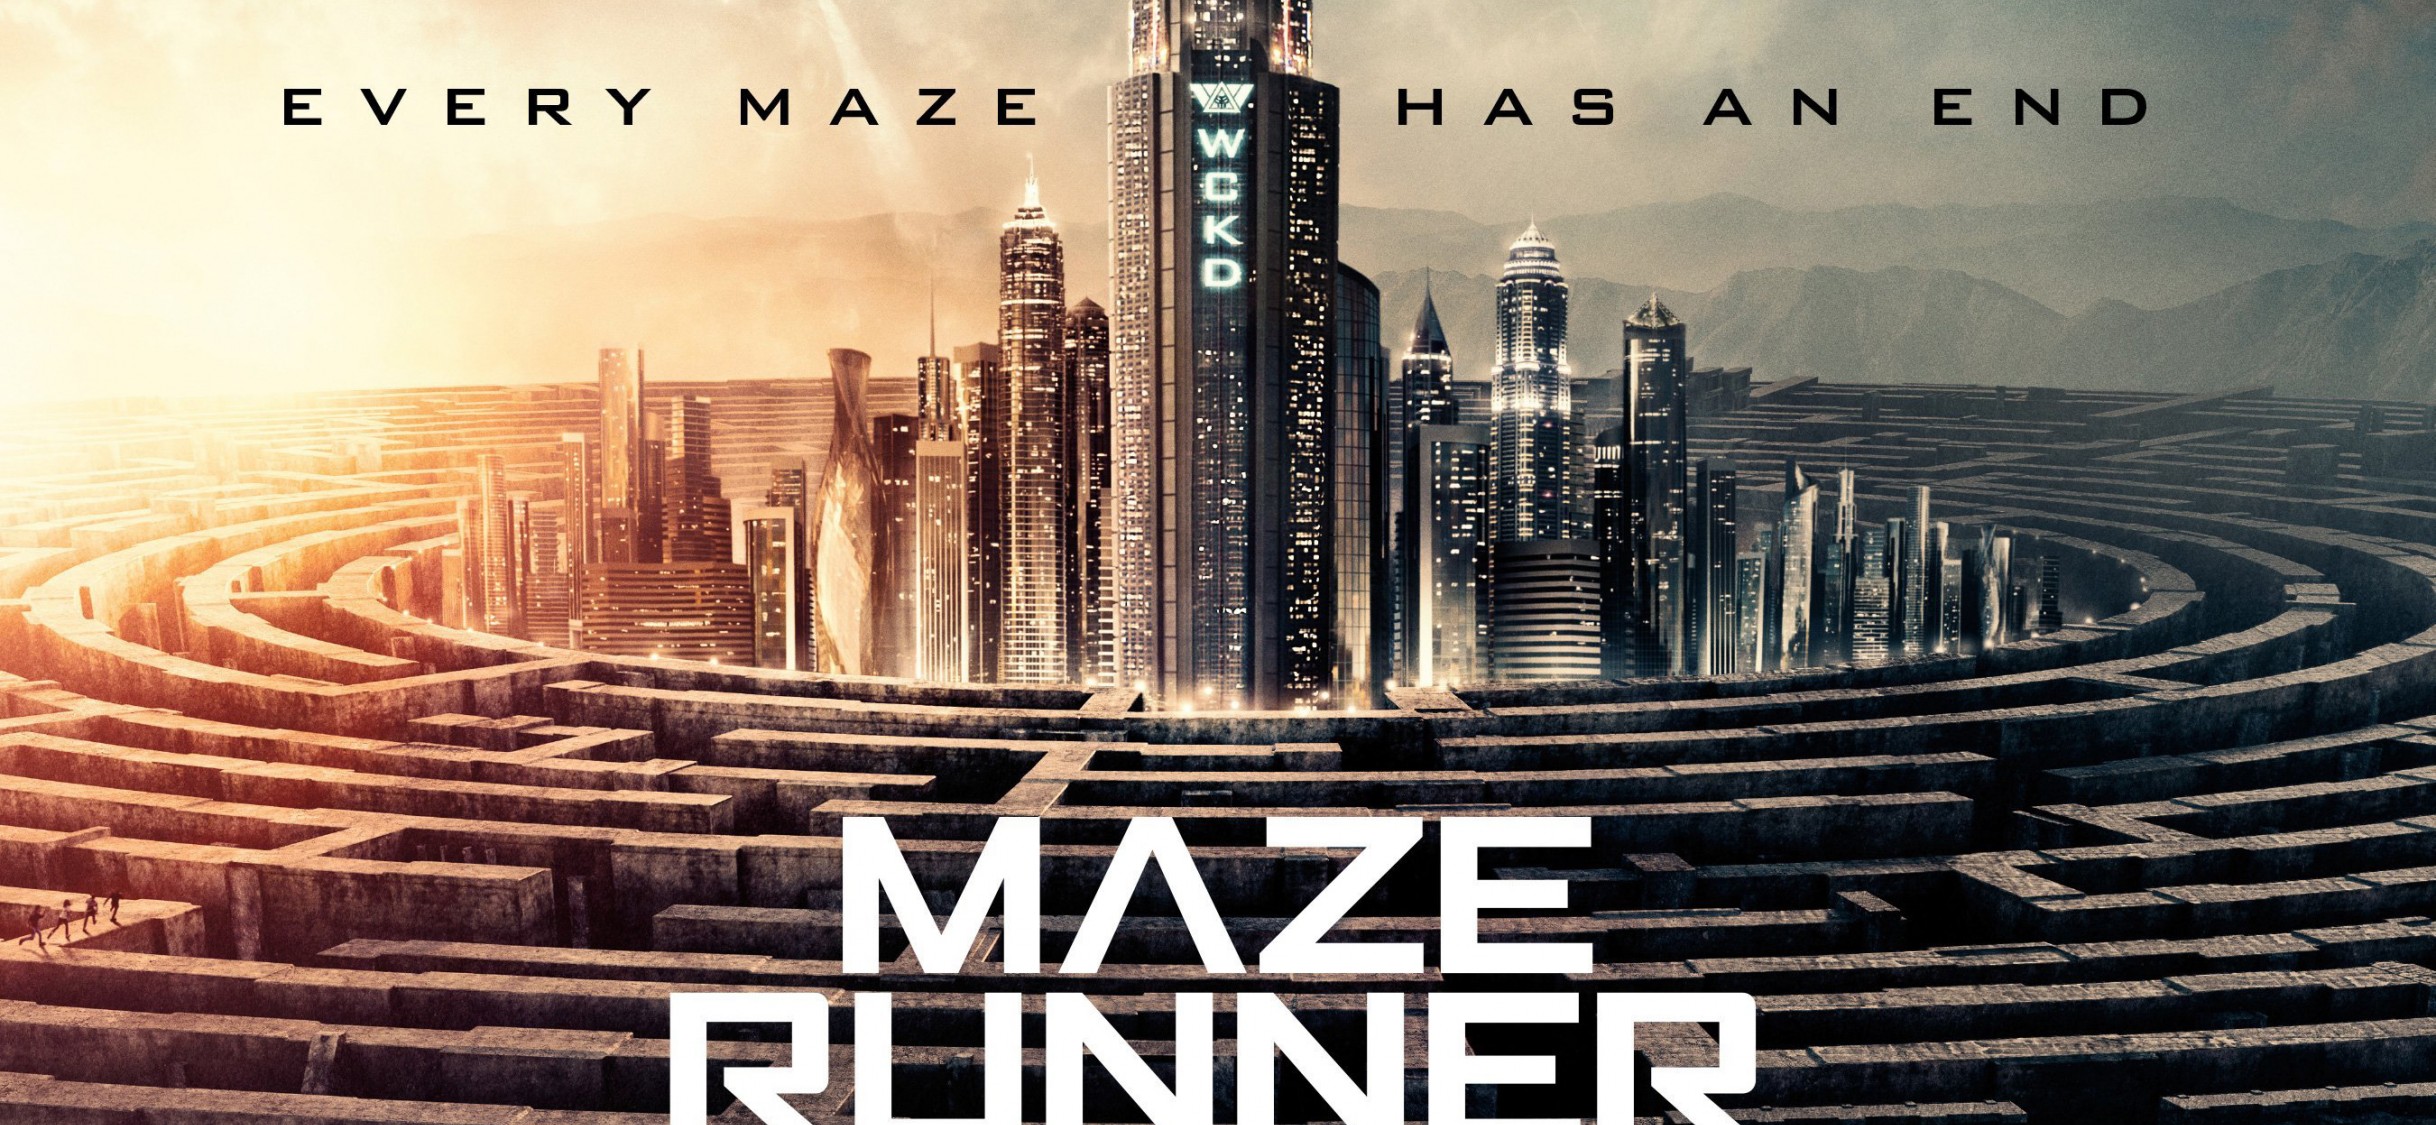 Download The Maze Runner Full Hd Wallpaper for Desktop and Mobiles